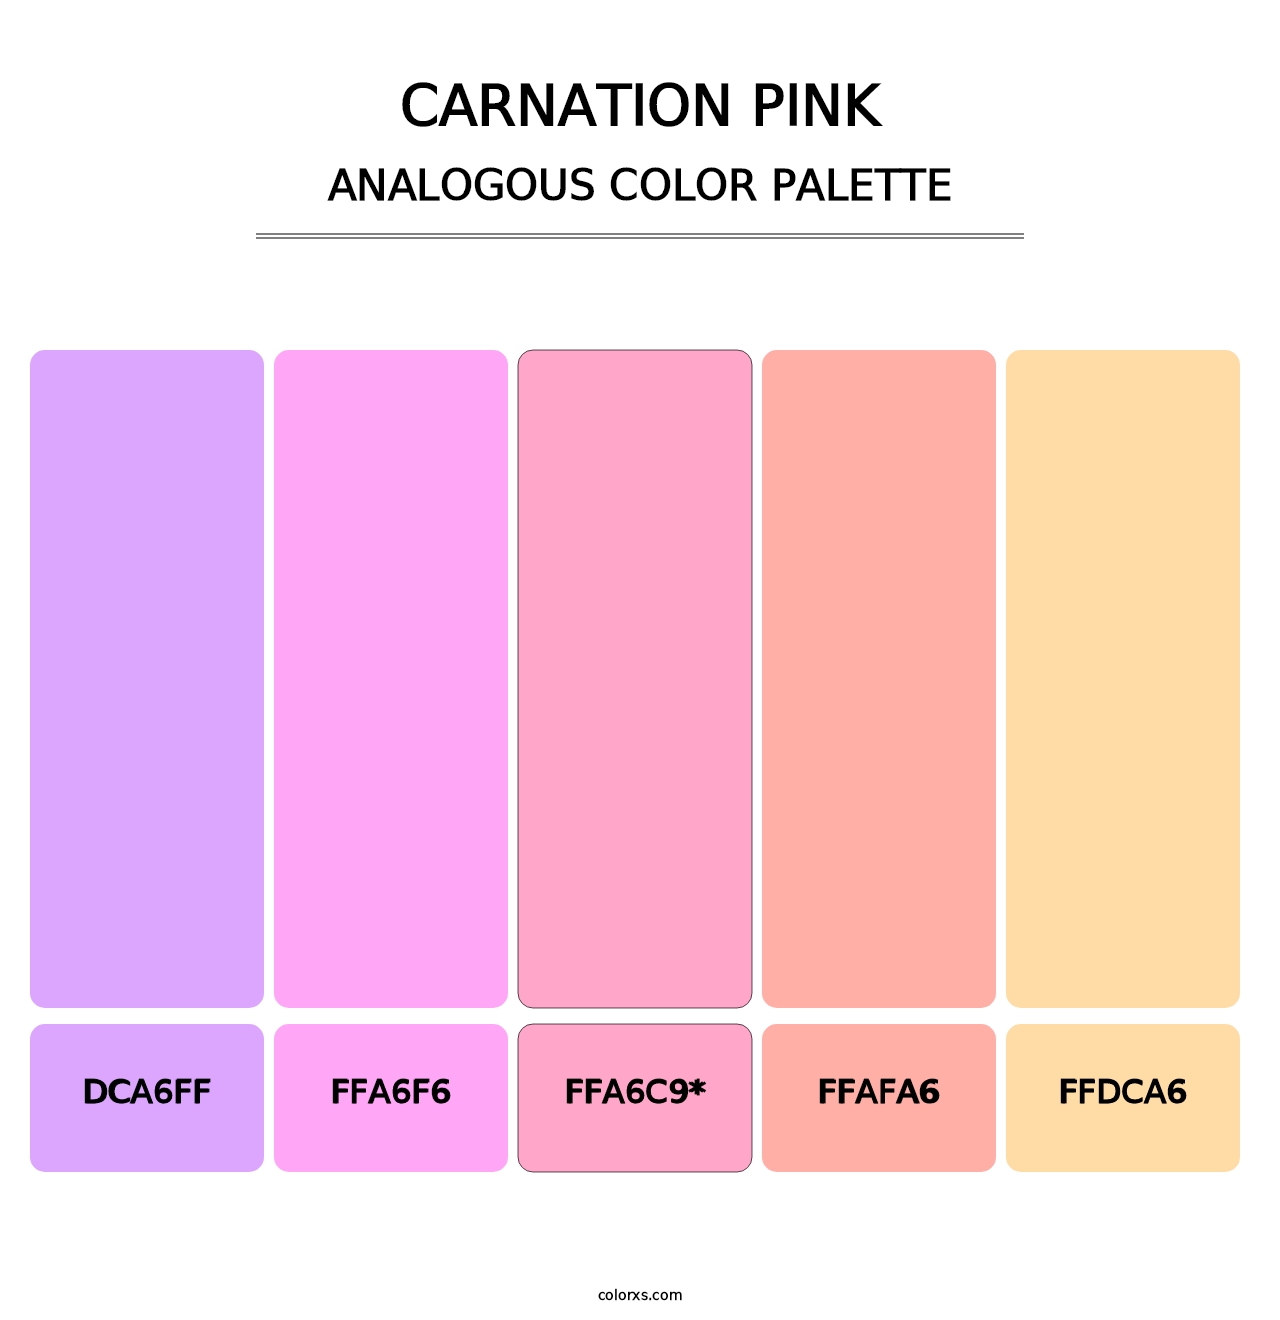 Carnation Pink - Analogous Color Palette